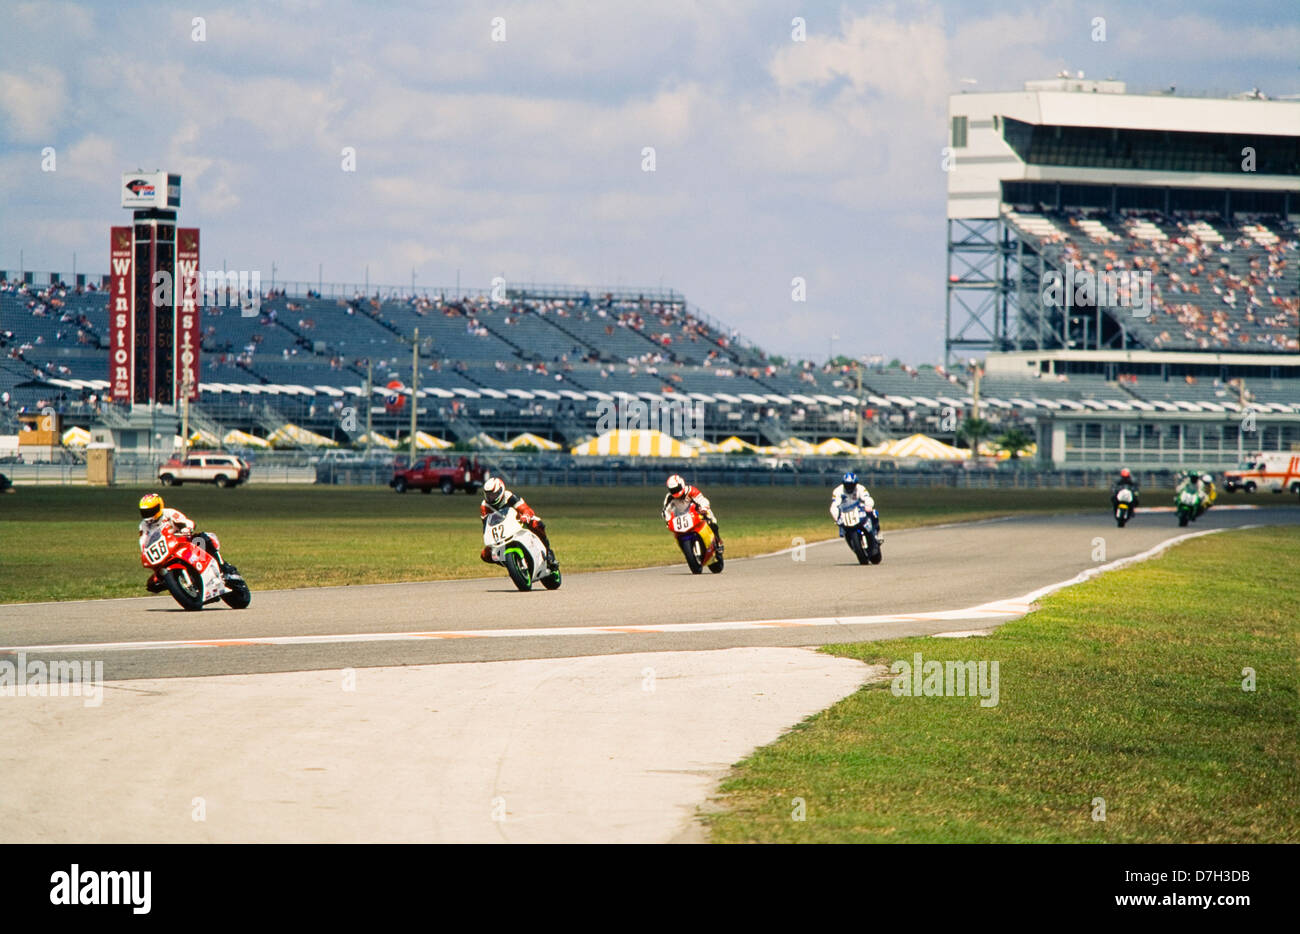 Motocycle Racing, Daytona Speedway, Florida, speed blur effects. Stock Photo